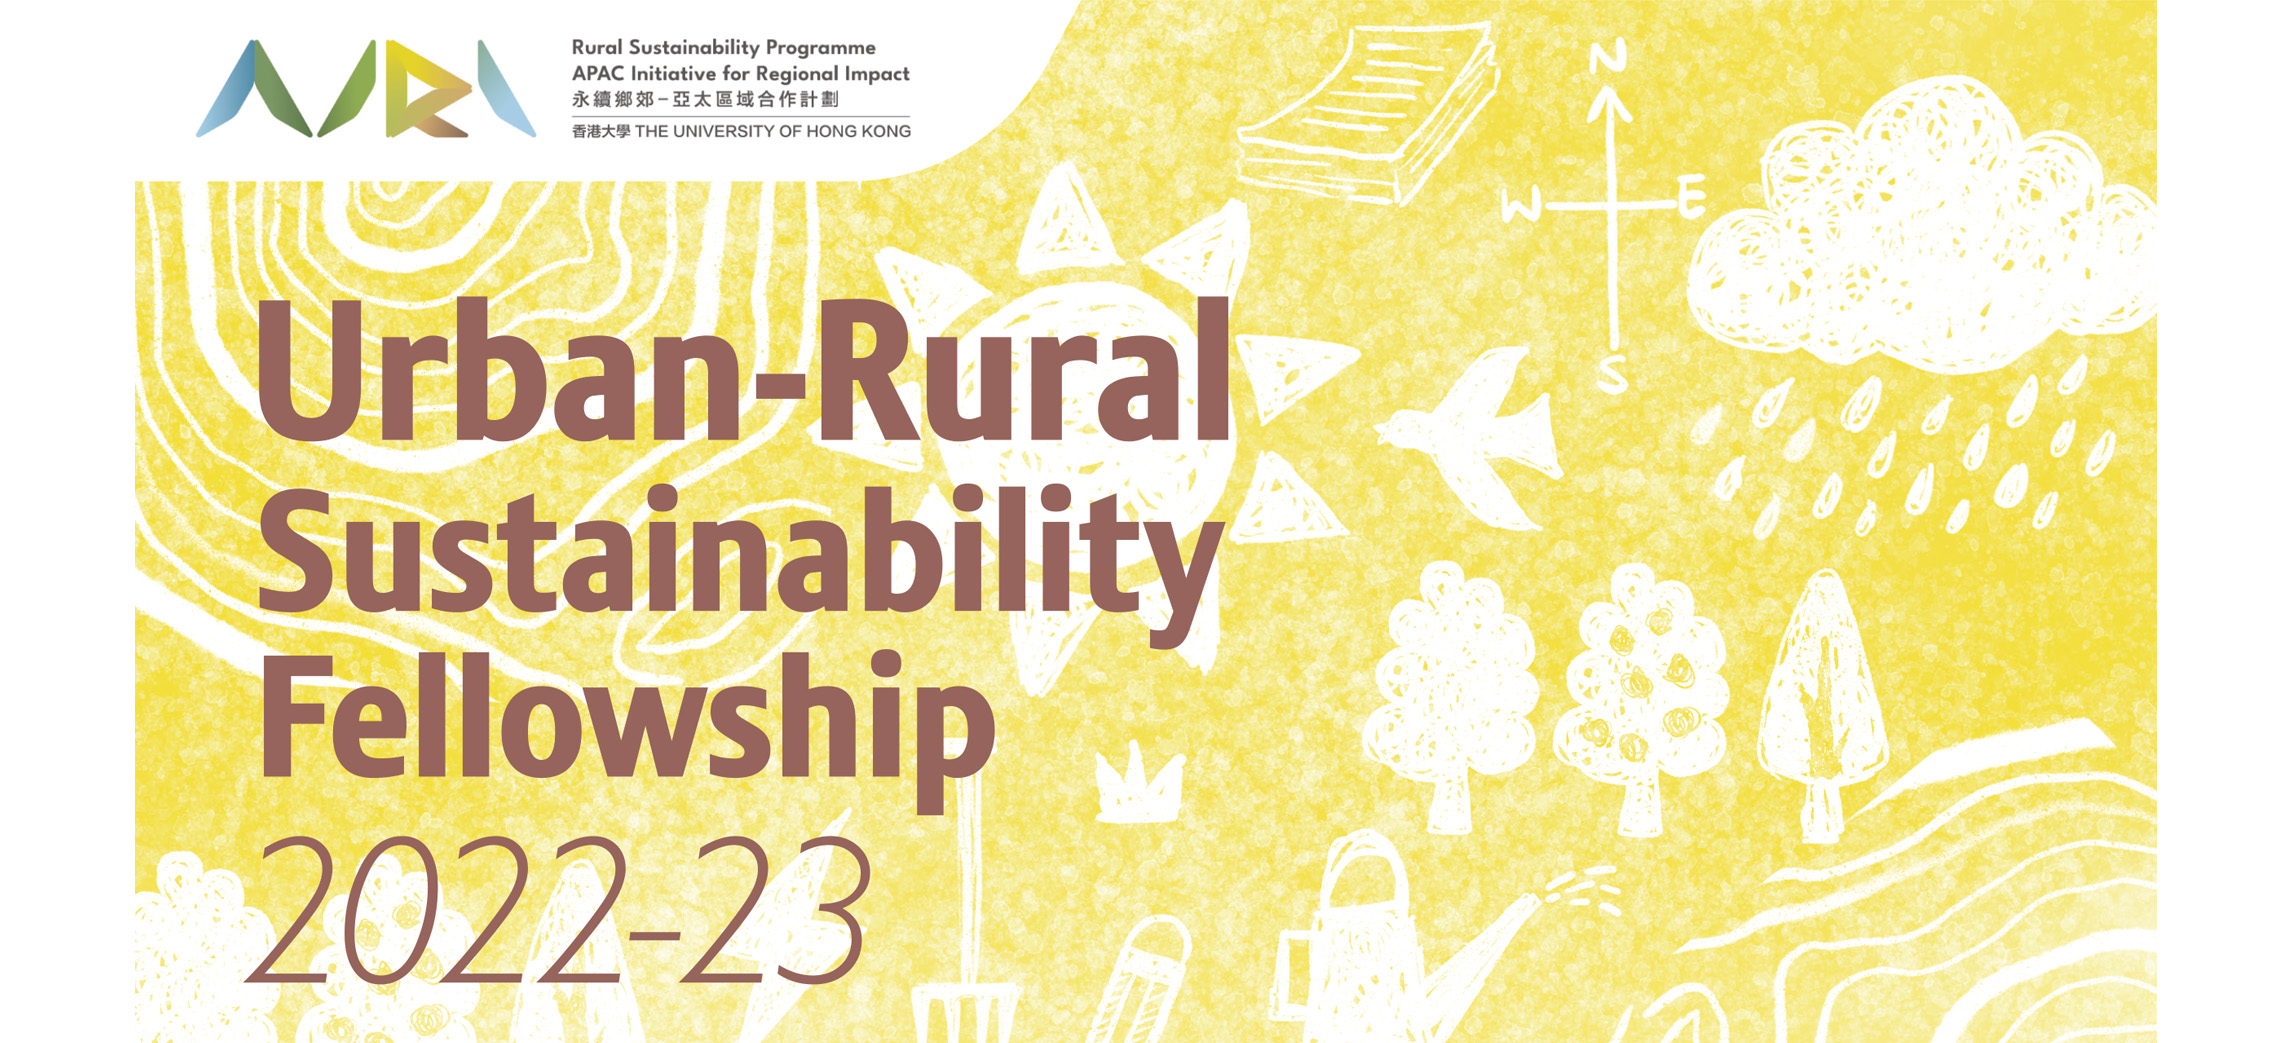 Urban-Rural Sustainability Fellowship 2022-23